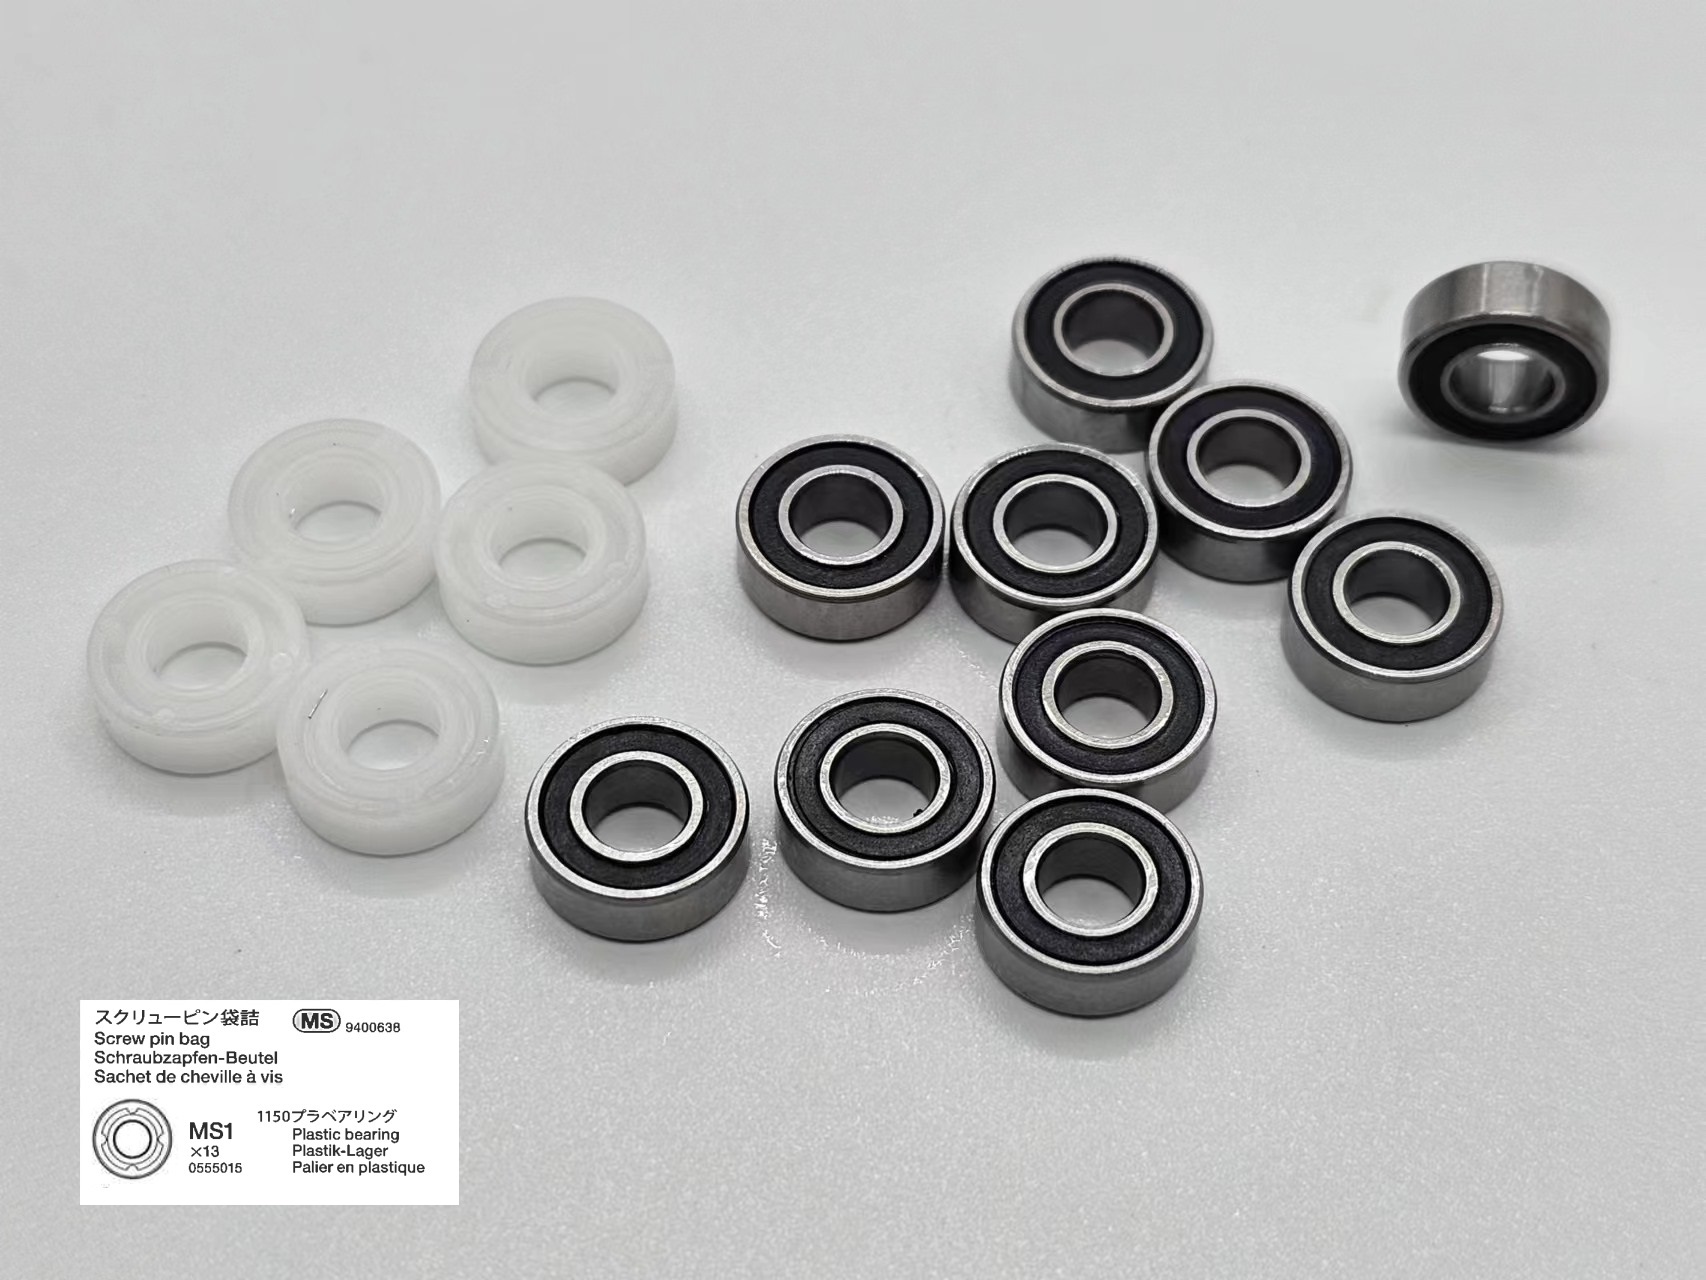 E1.Metal ball bearing 1150. 11x5x4